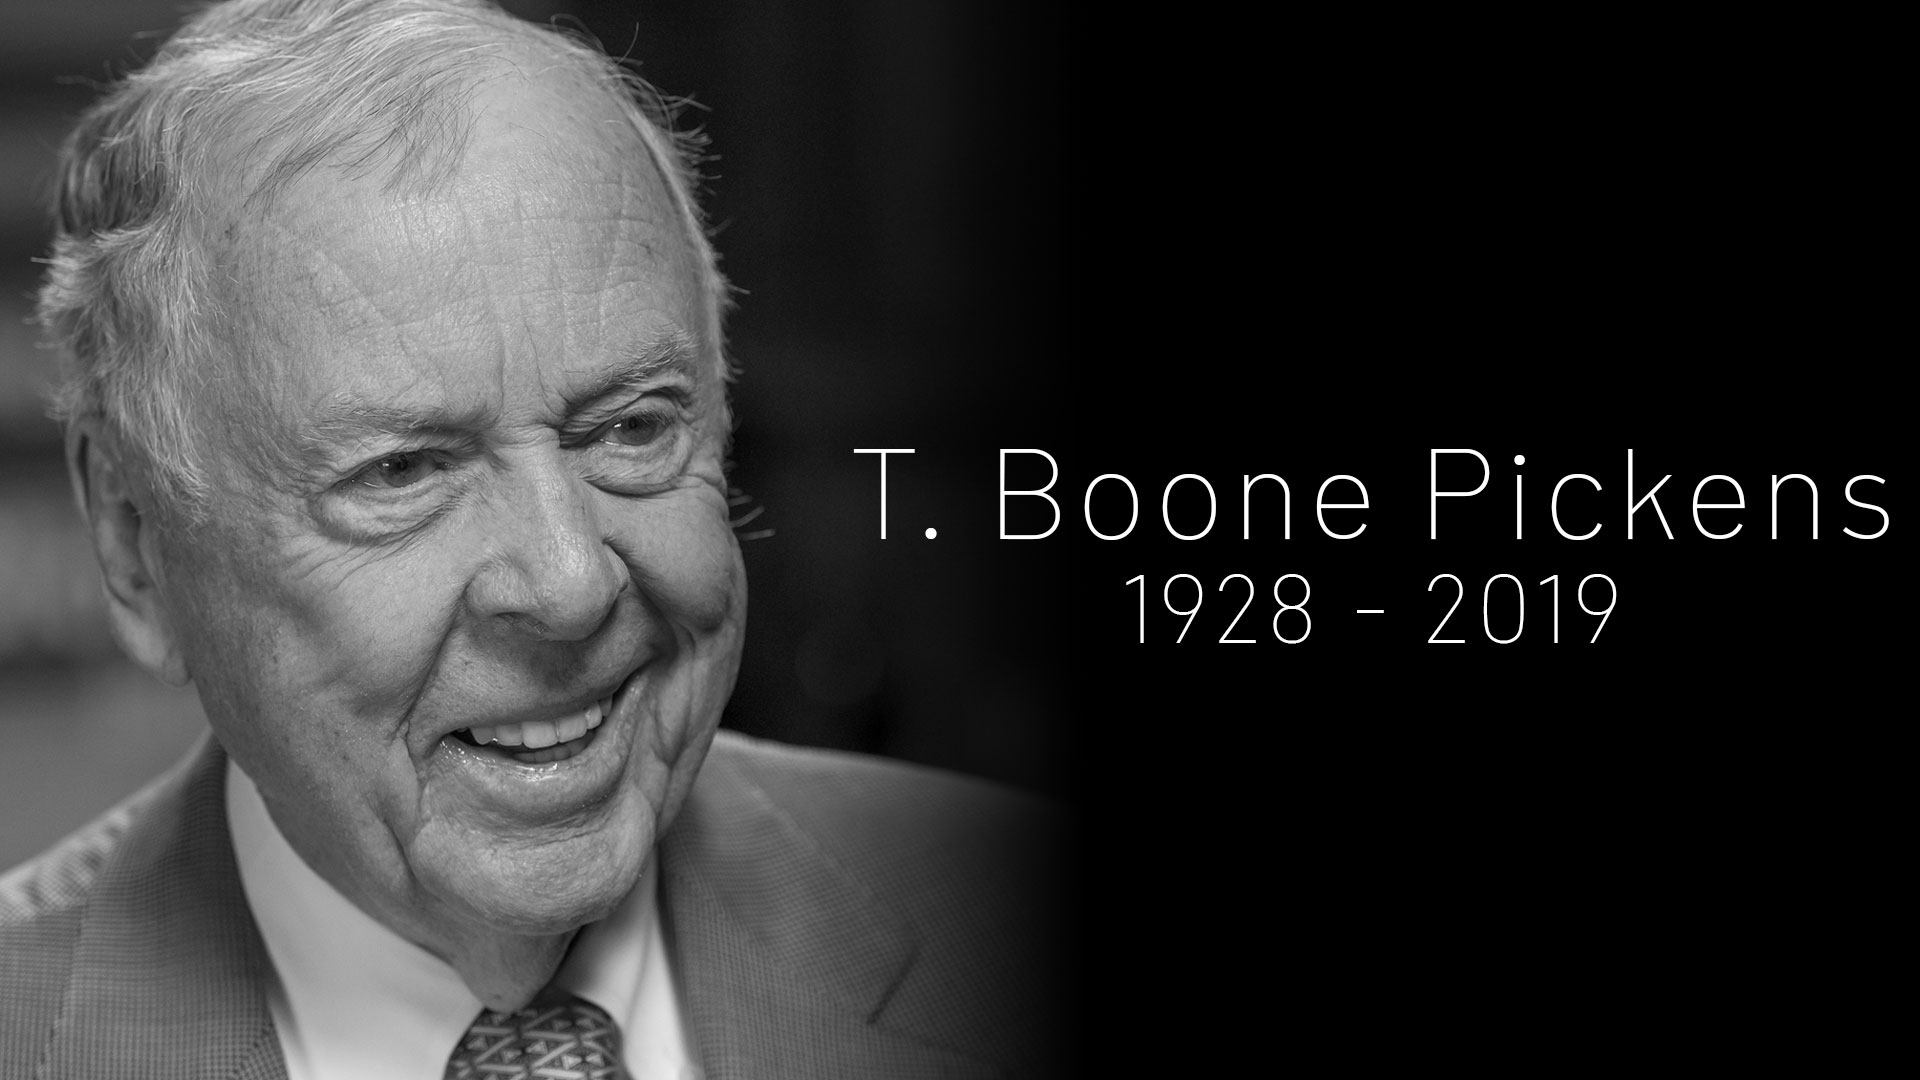 Boone Pickens Remembered for Generosity, Tenacity at Funeral